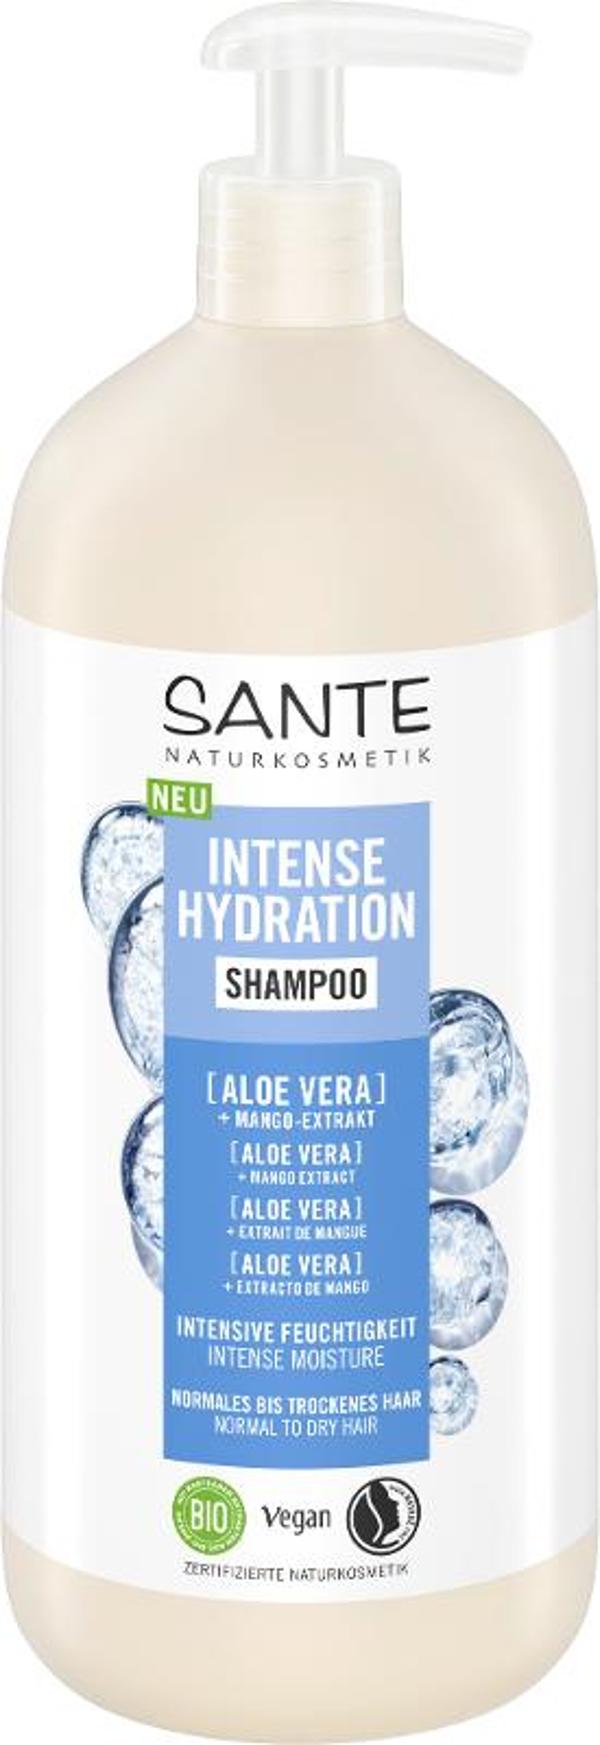 Produktfoto zu Intense Hydration Shampoo Hyaluron 950ml Sante